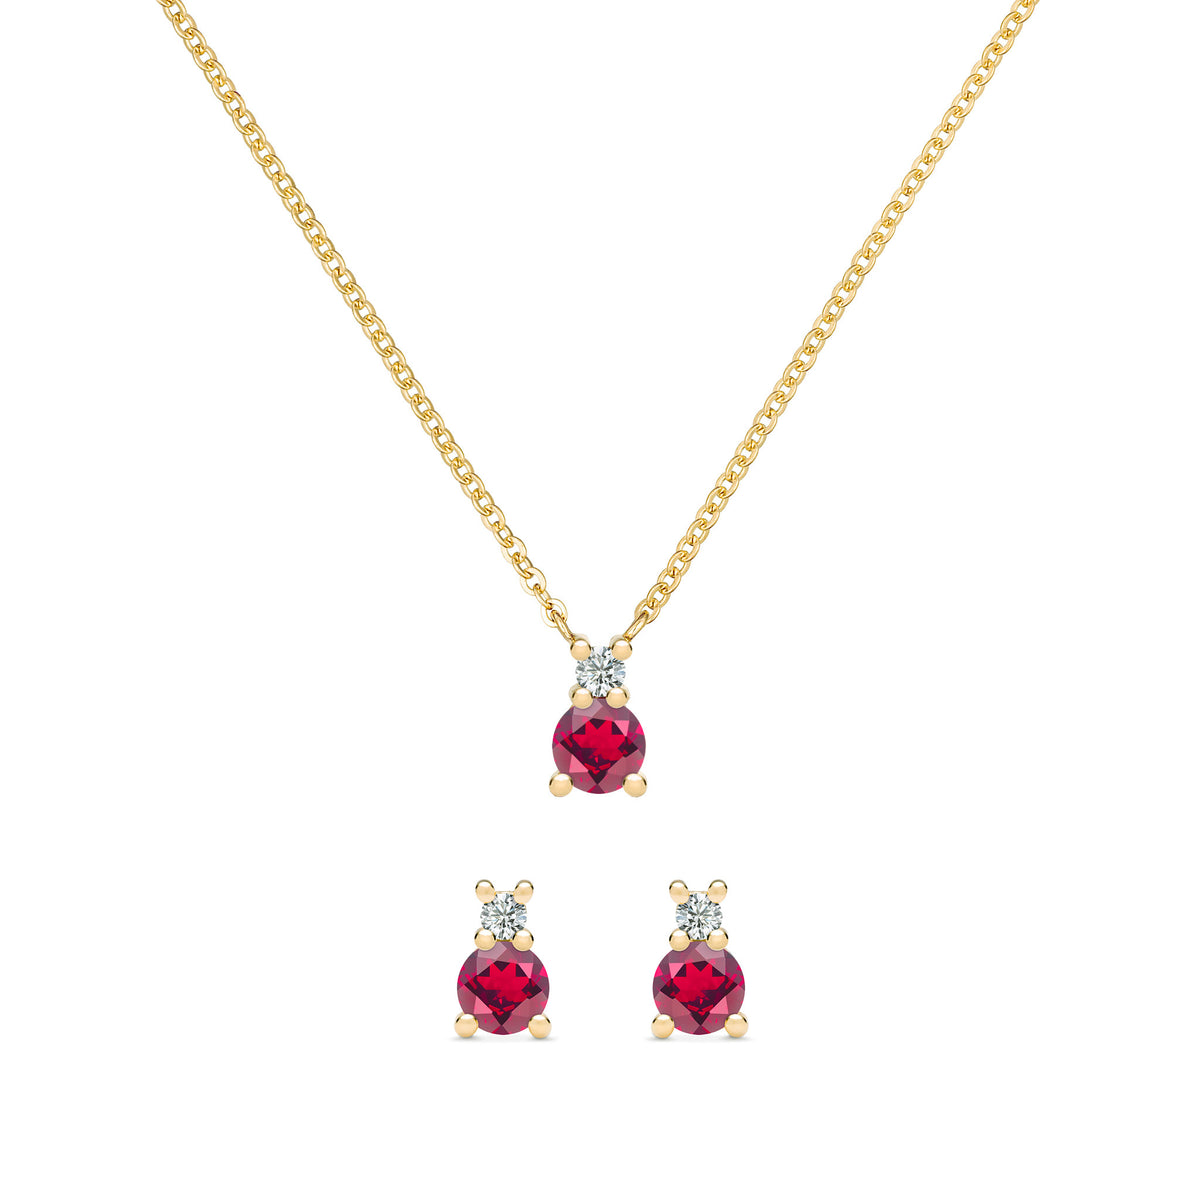 Red American Diamond Jewellery Set | FashionCrab.com